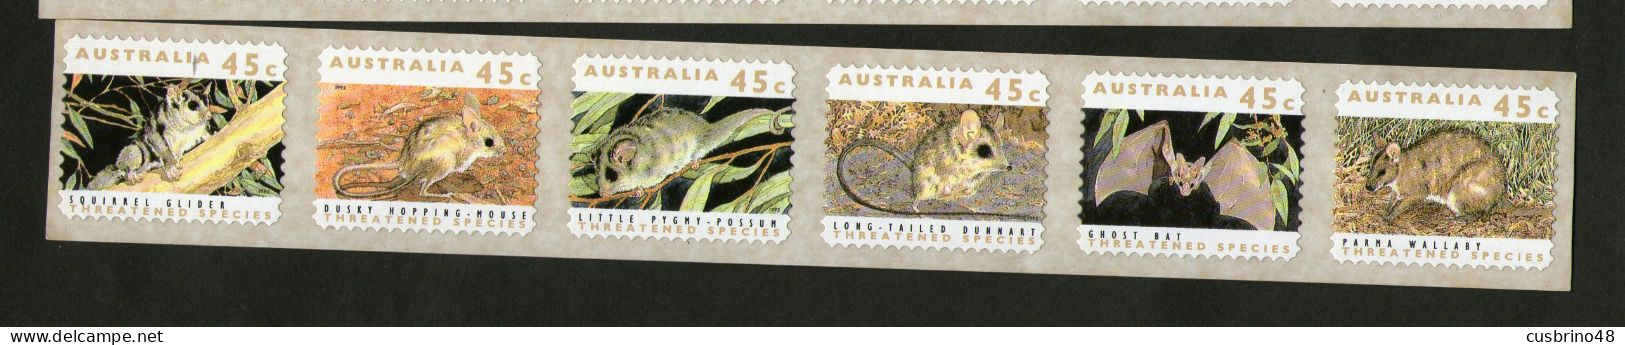 AUSTRALIA 1992 P & S Strip 45c Endangered Species Strip 6 PRINTSET 1 Koala Reprint. - Lot  AUS 236 - Nuovi